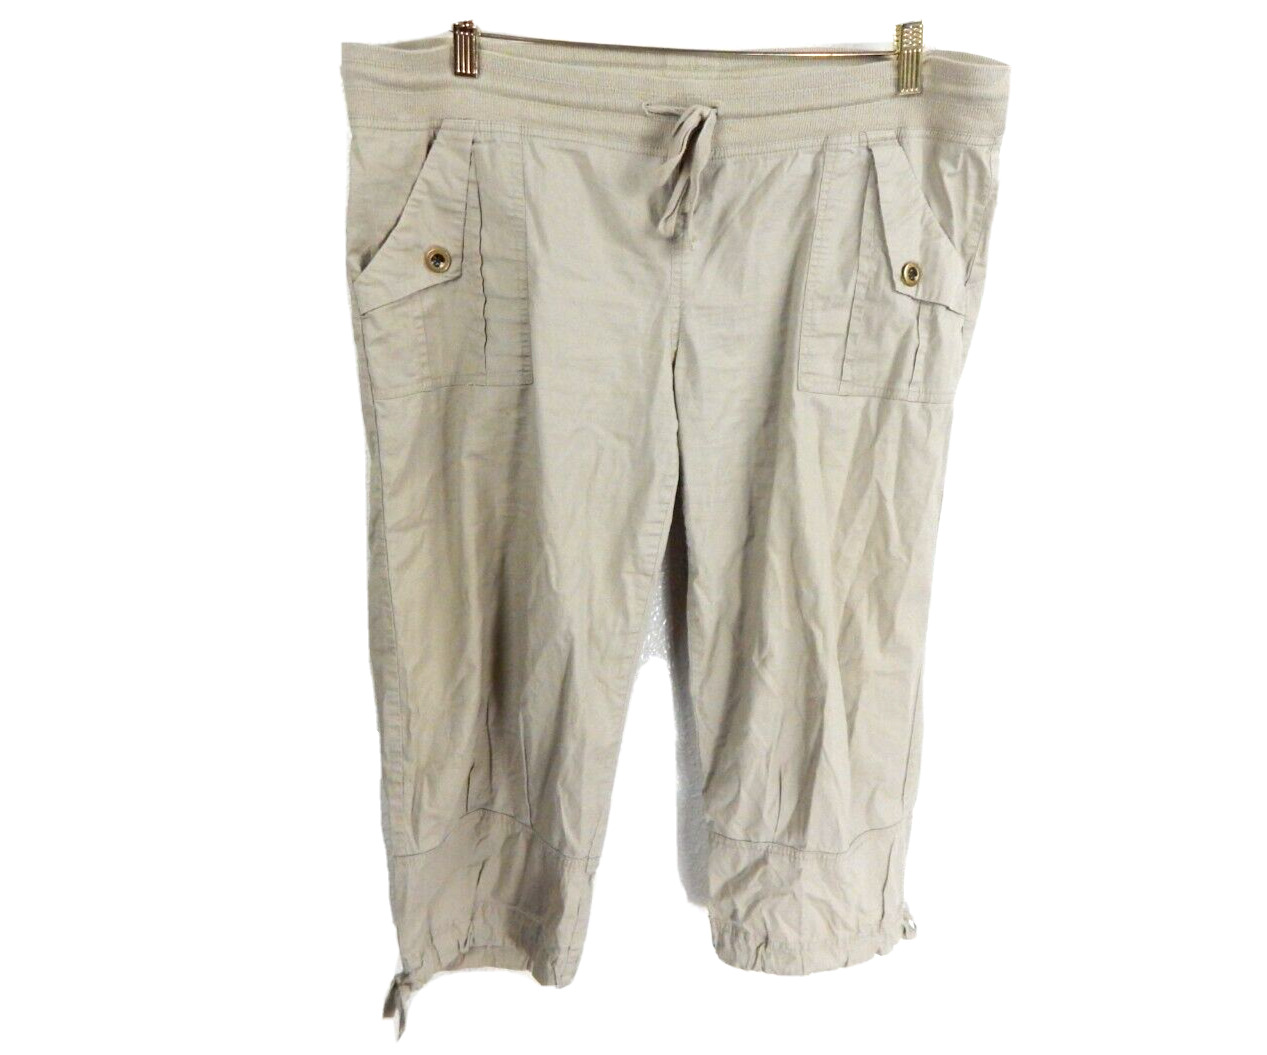 Wearables XCVI Women's Large 12 Pants Beige Crop Capr… - Gem